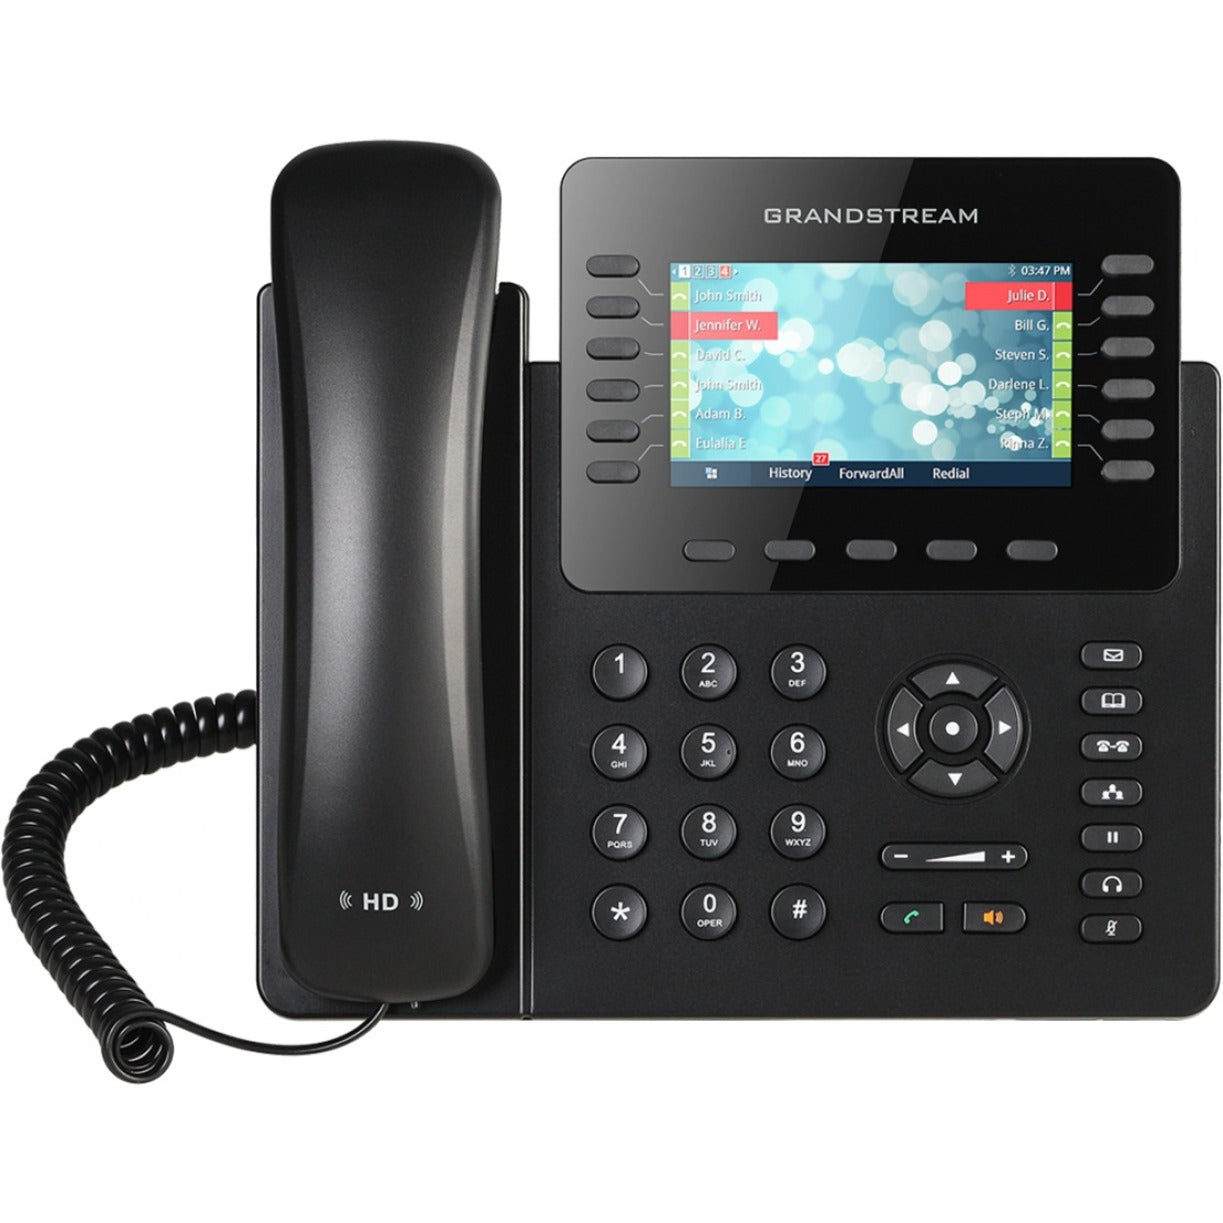 Grandstream GXP2170 IP Phone, 6 Lines, Color Display, PoE, 48 Digital BLF